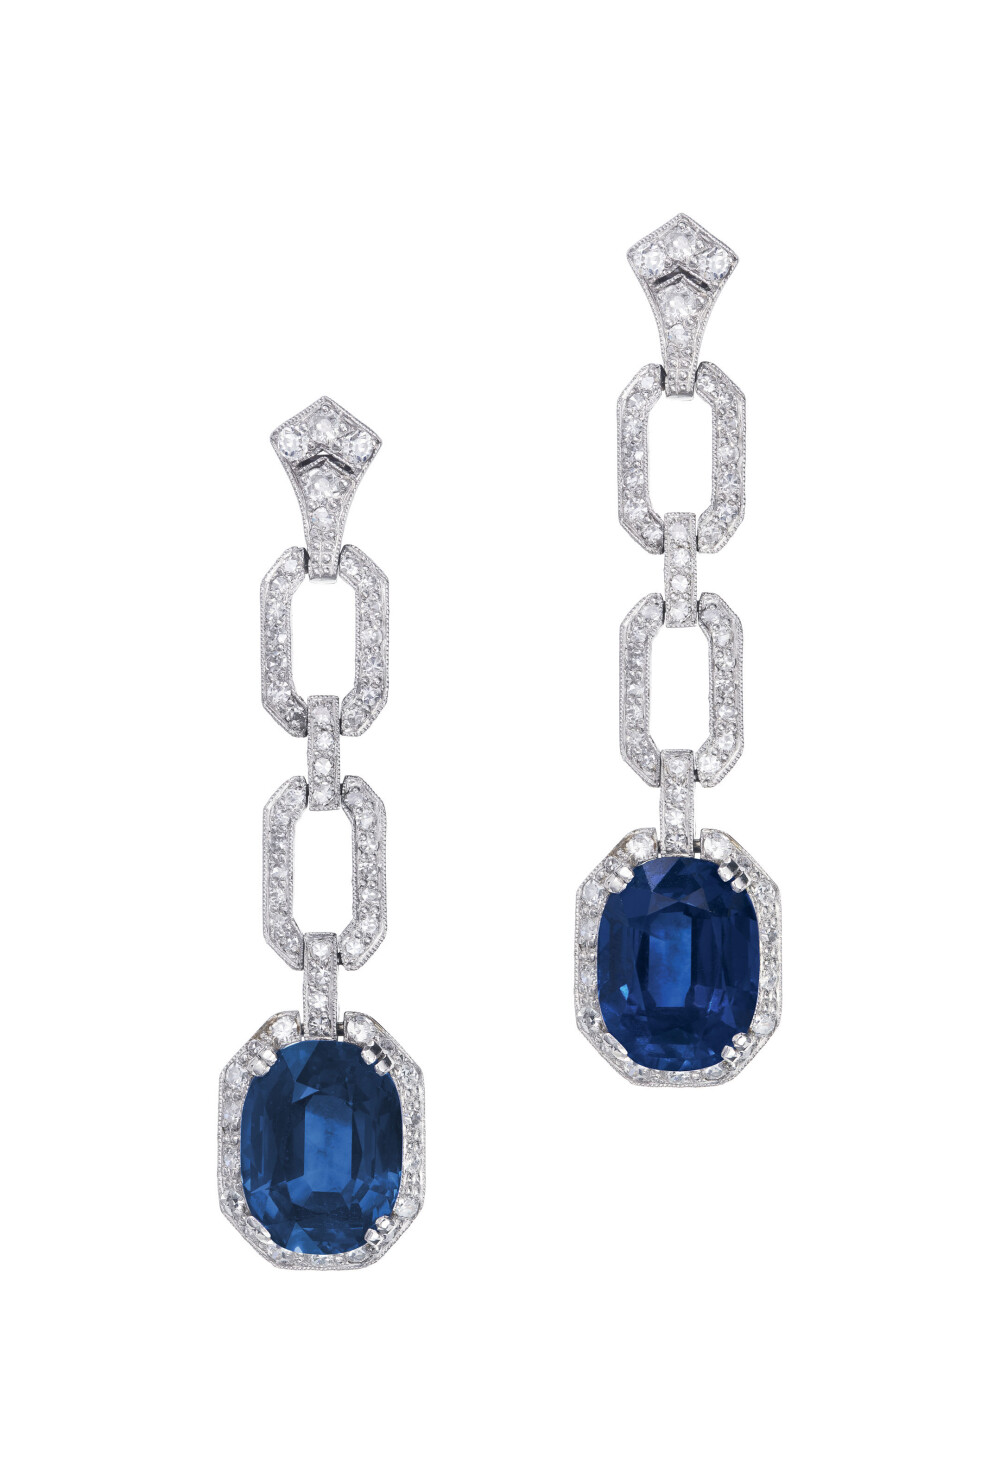 Christie's 佳士得日内瓦秋拍 蓝宝石耳坠 20世纪初 主石分别为 5.22和5.07ct 枕形蓝宝石，经SSEF鉴定产地为缅甸，无加热迹象，镶嵌老式和单切割钻石，长度4.5厘米。成交价23.125万瑞郎